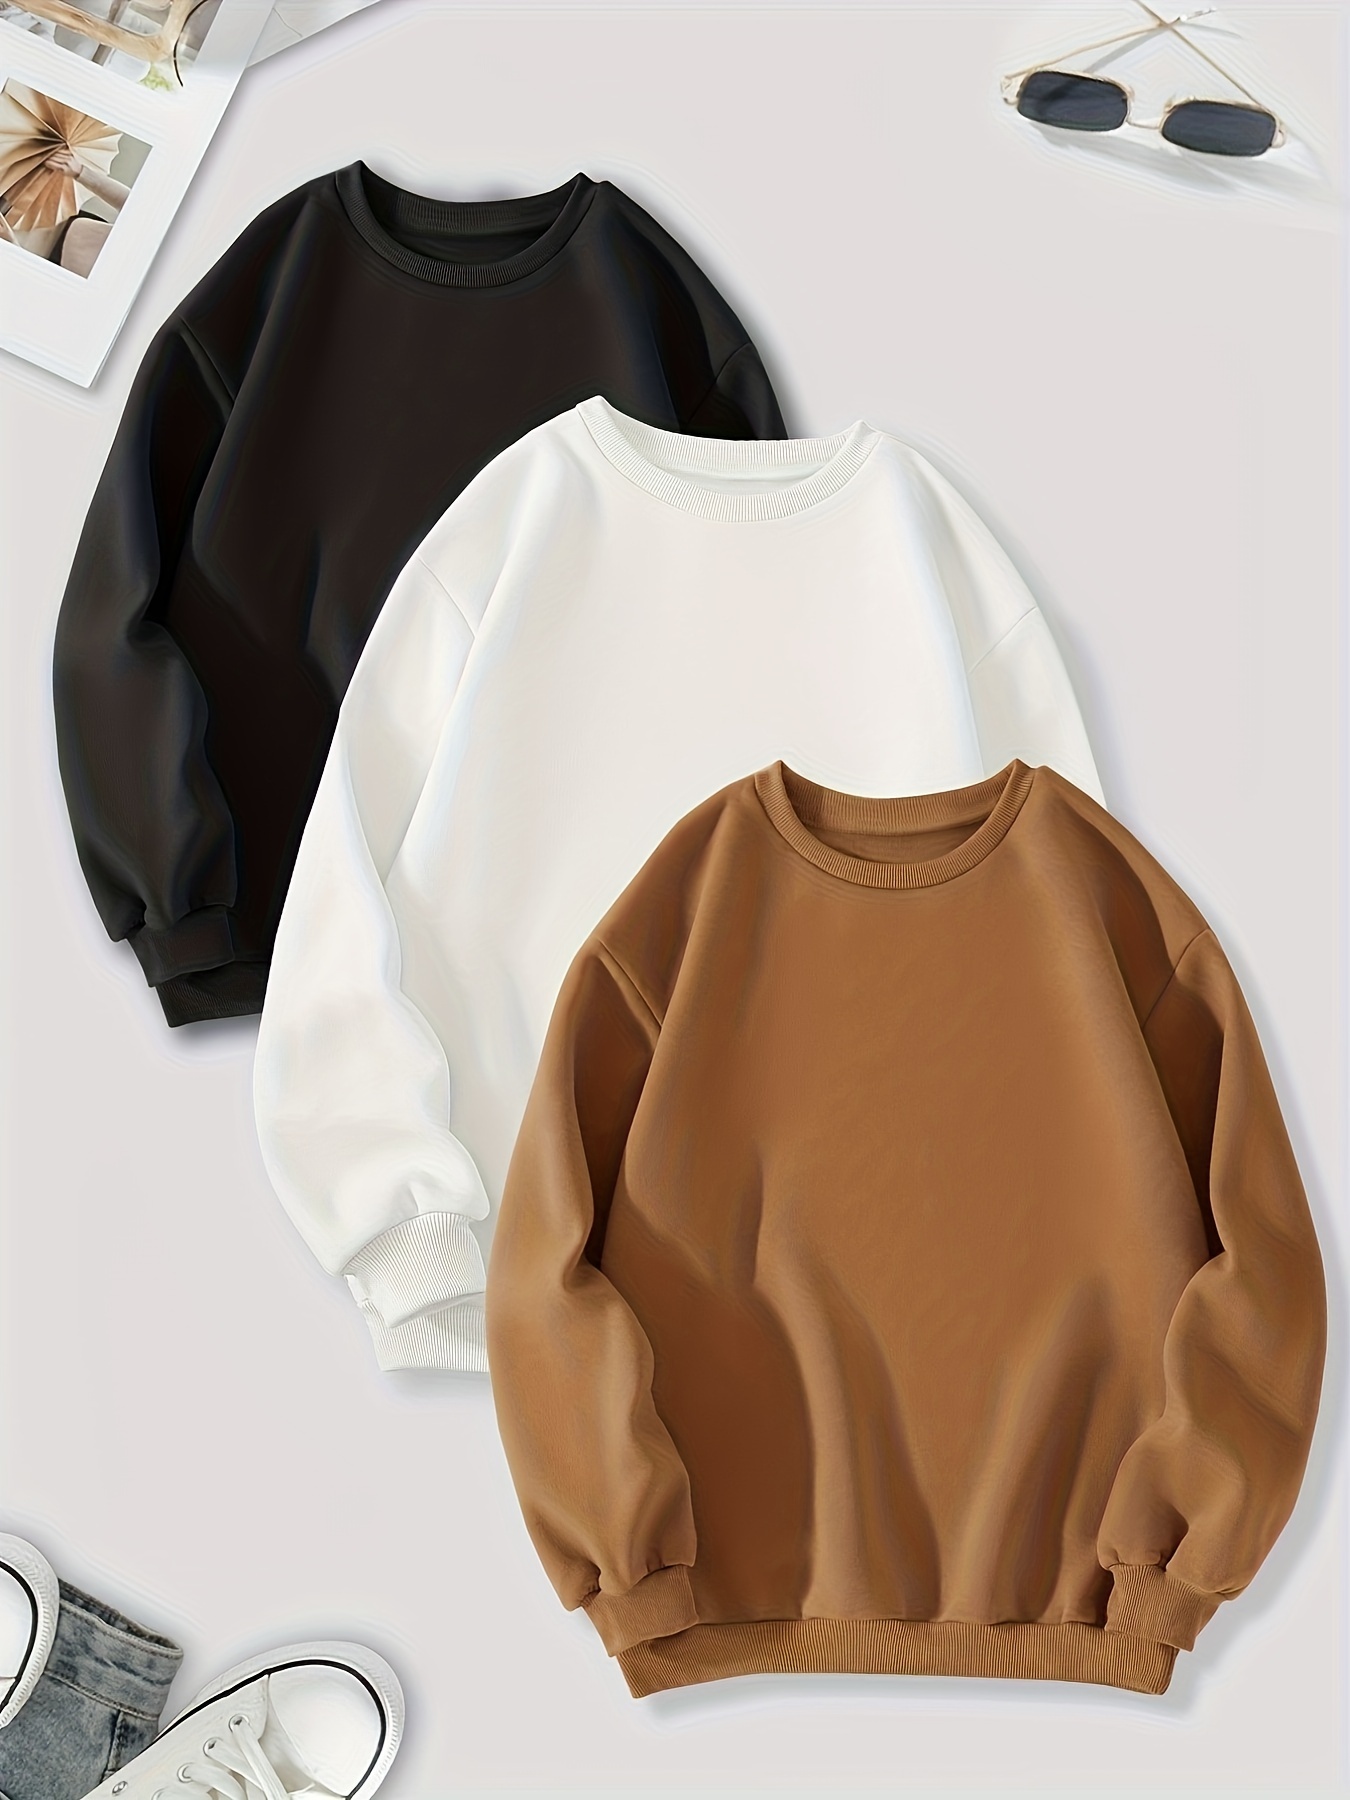 Long Sleeve 17.5 oz Fleece Women's Crewneck Sweatshirt - Navy Blue –  Civilianaire